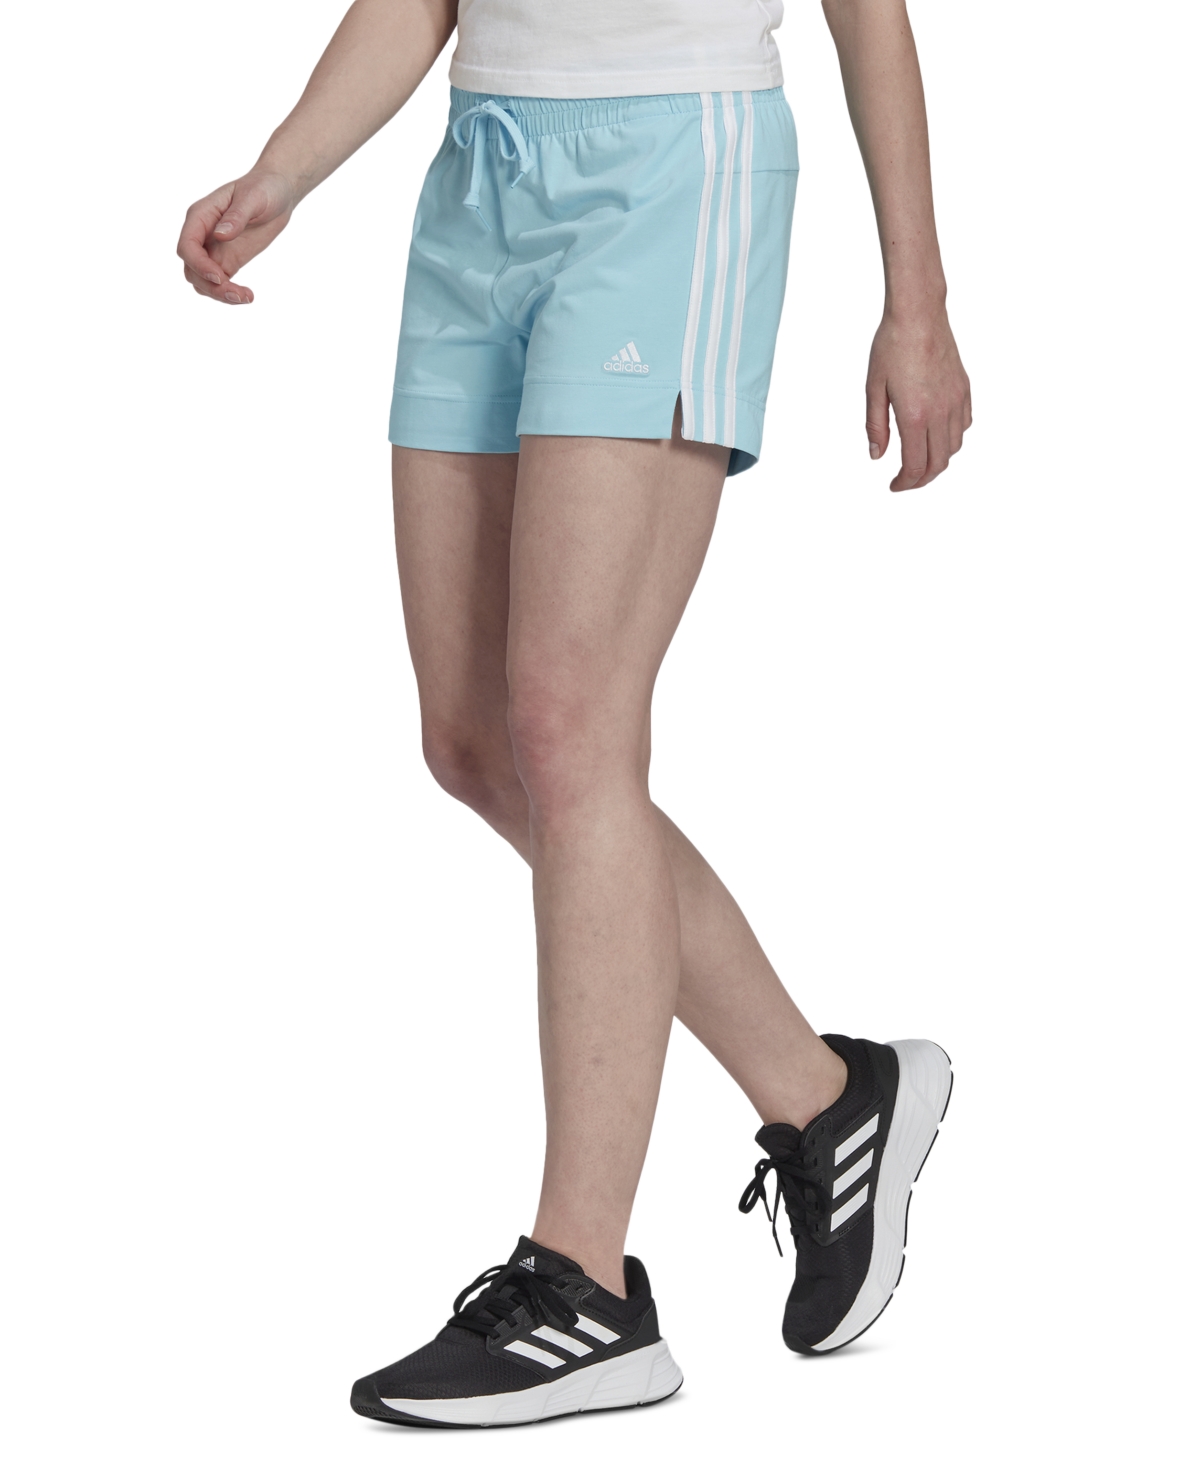 adidas Women's Essentials Slim 3-Stripes Shorts